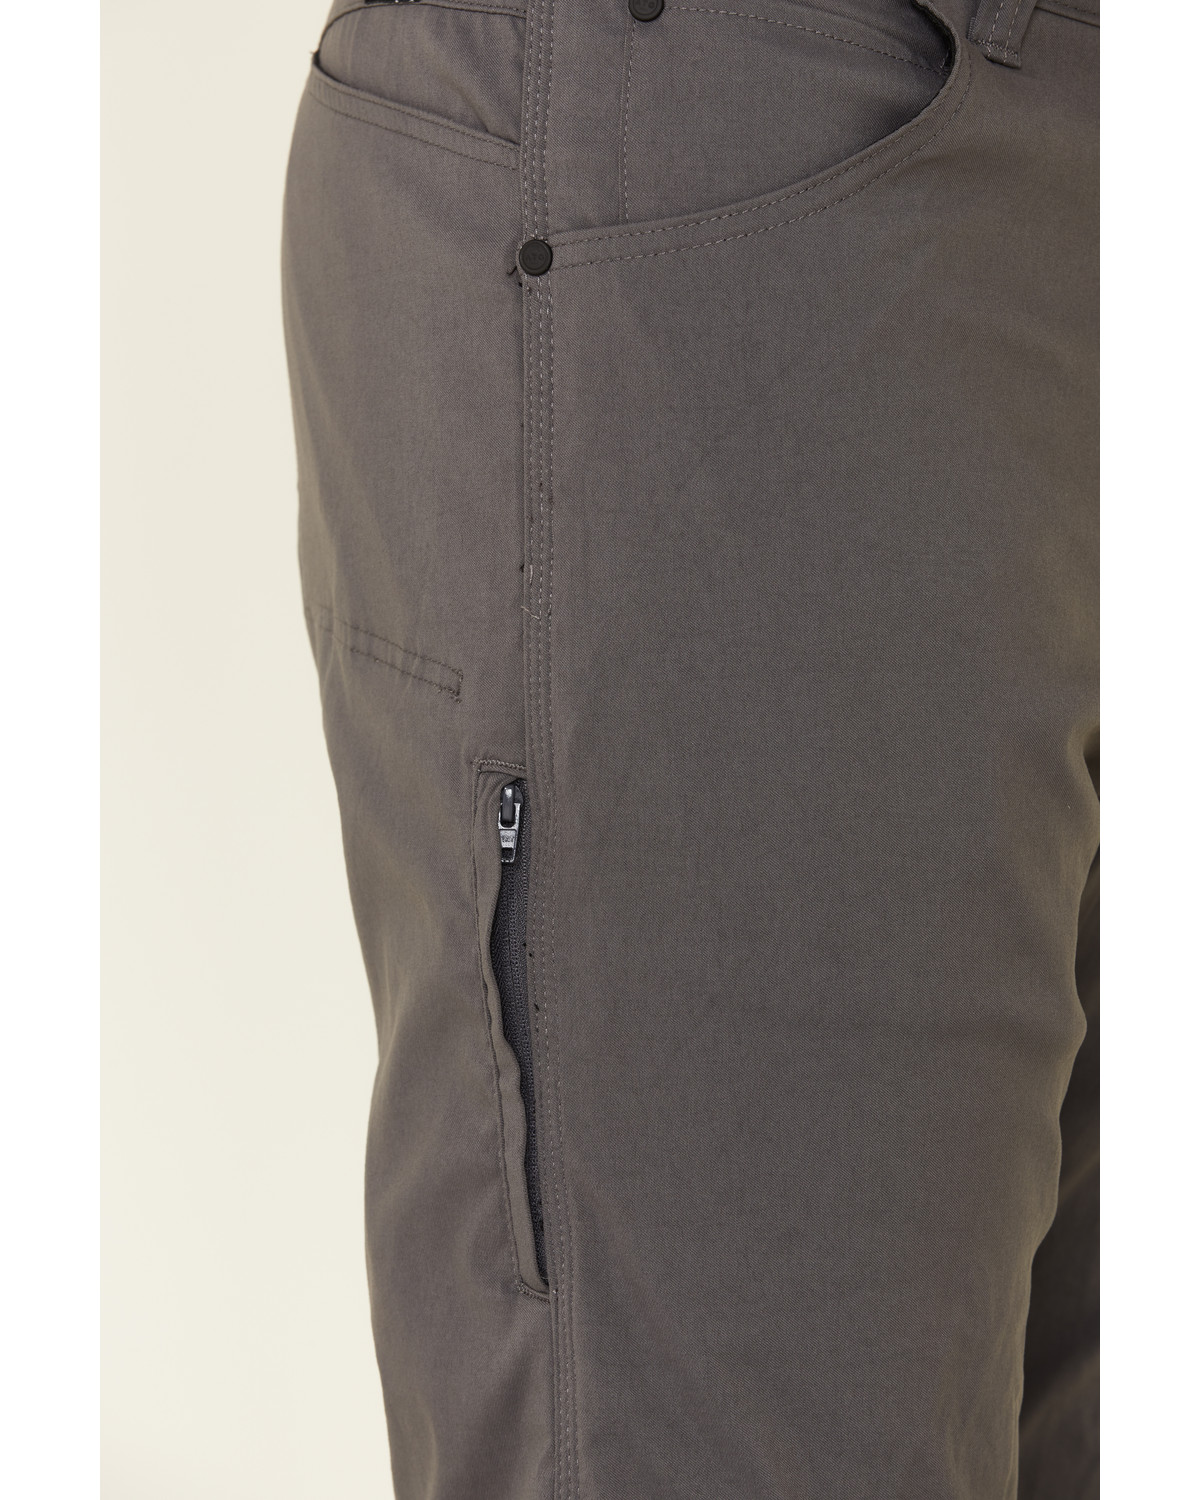 Wrangler ATG Men's Charcoal Fleece Lined Pants | Sheplers